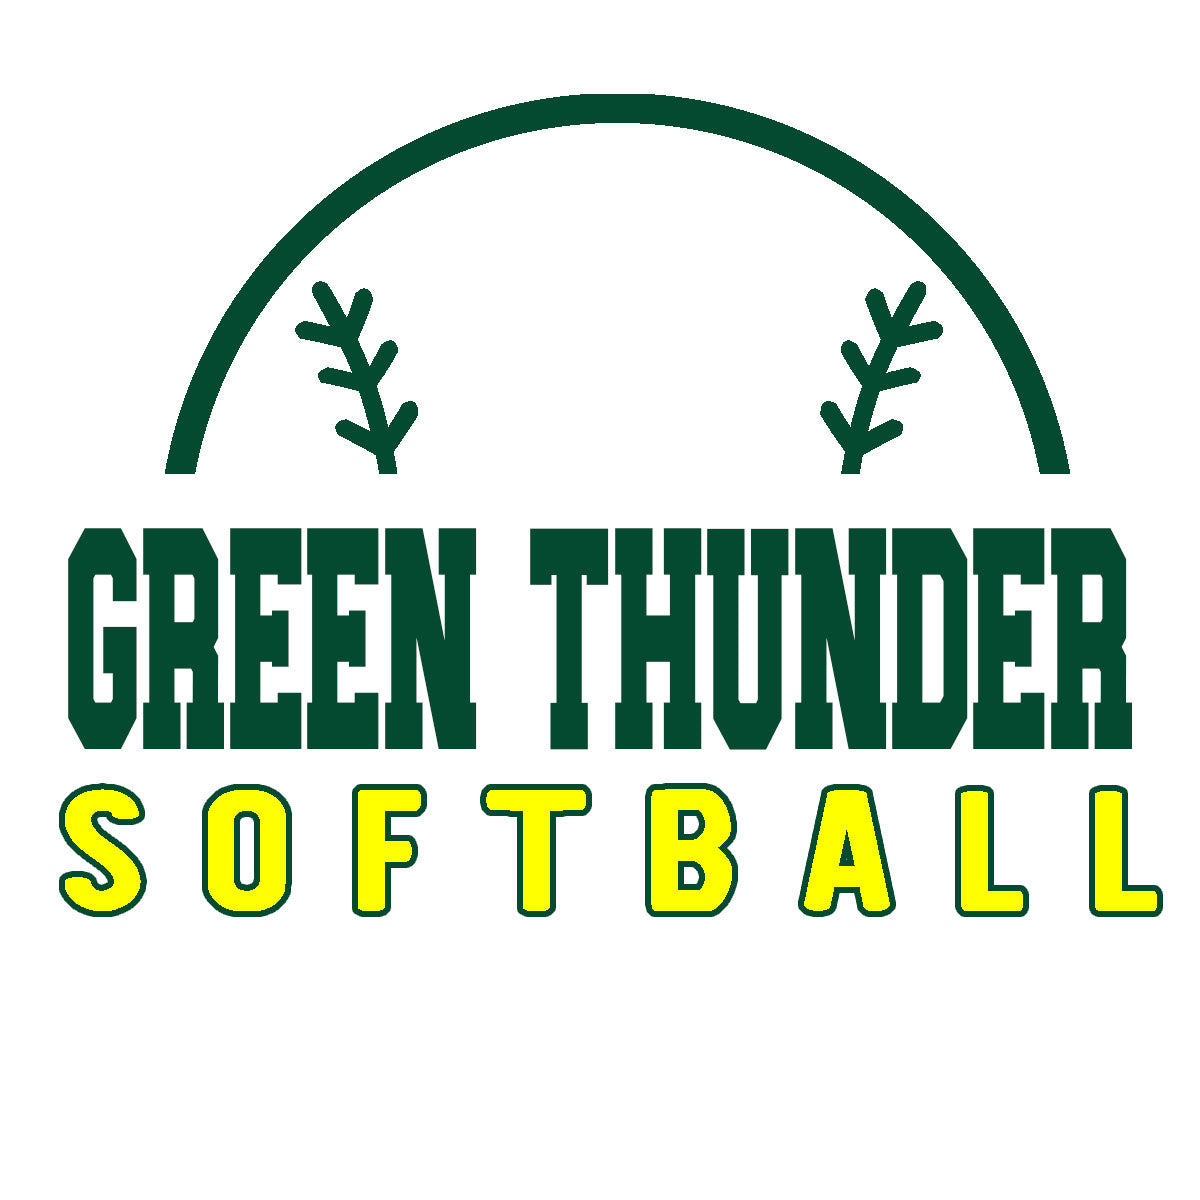 1 Green Thunder Softball